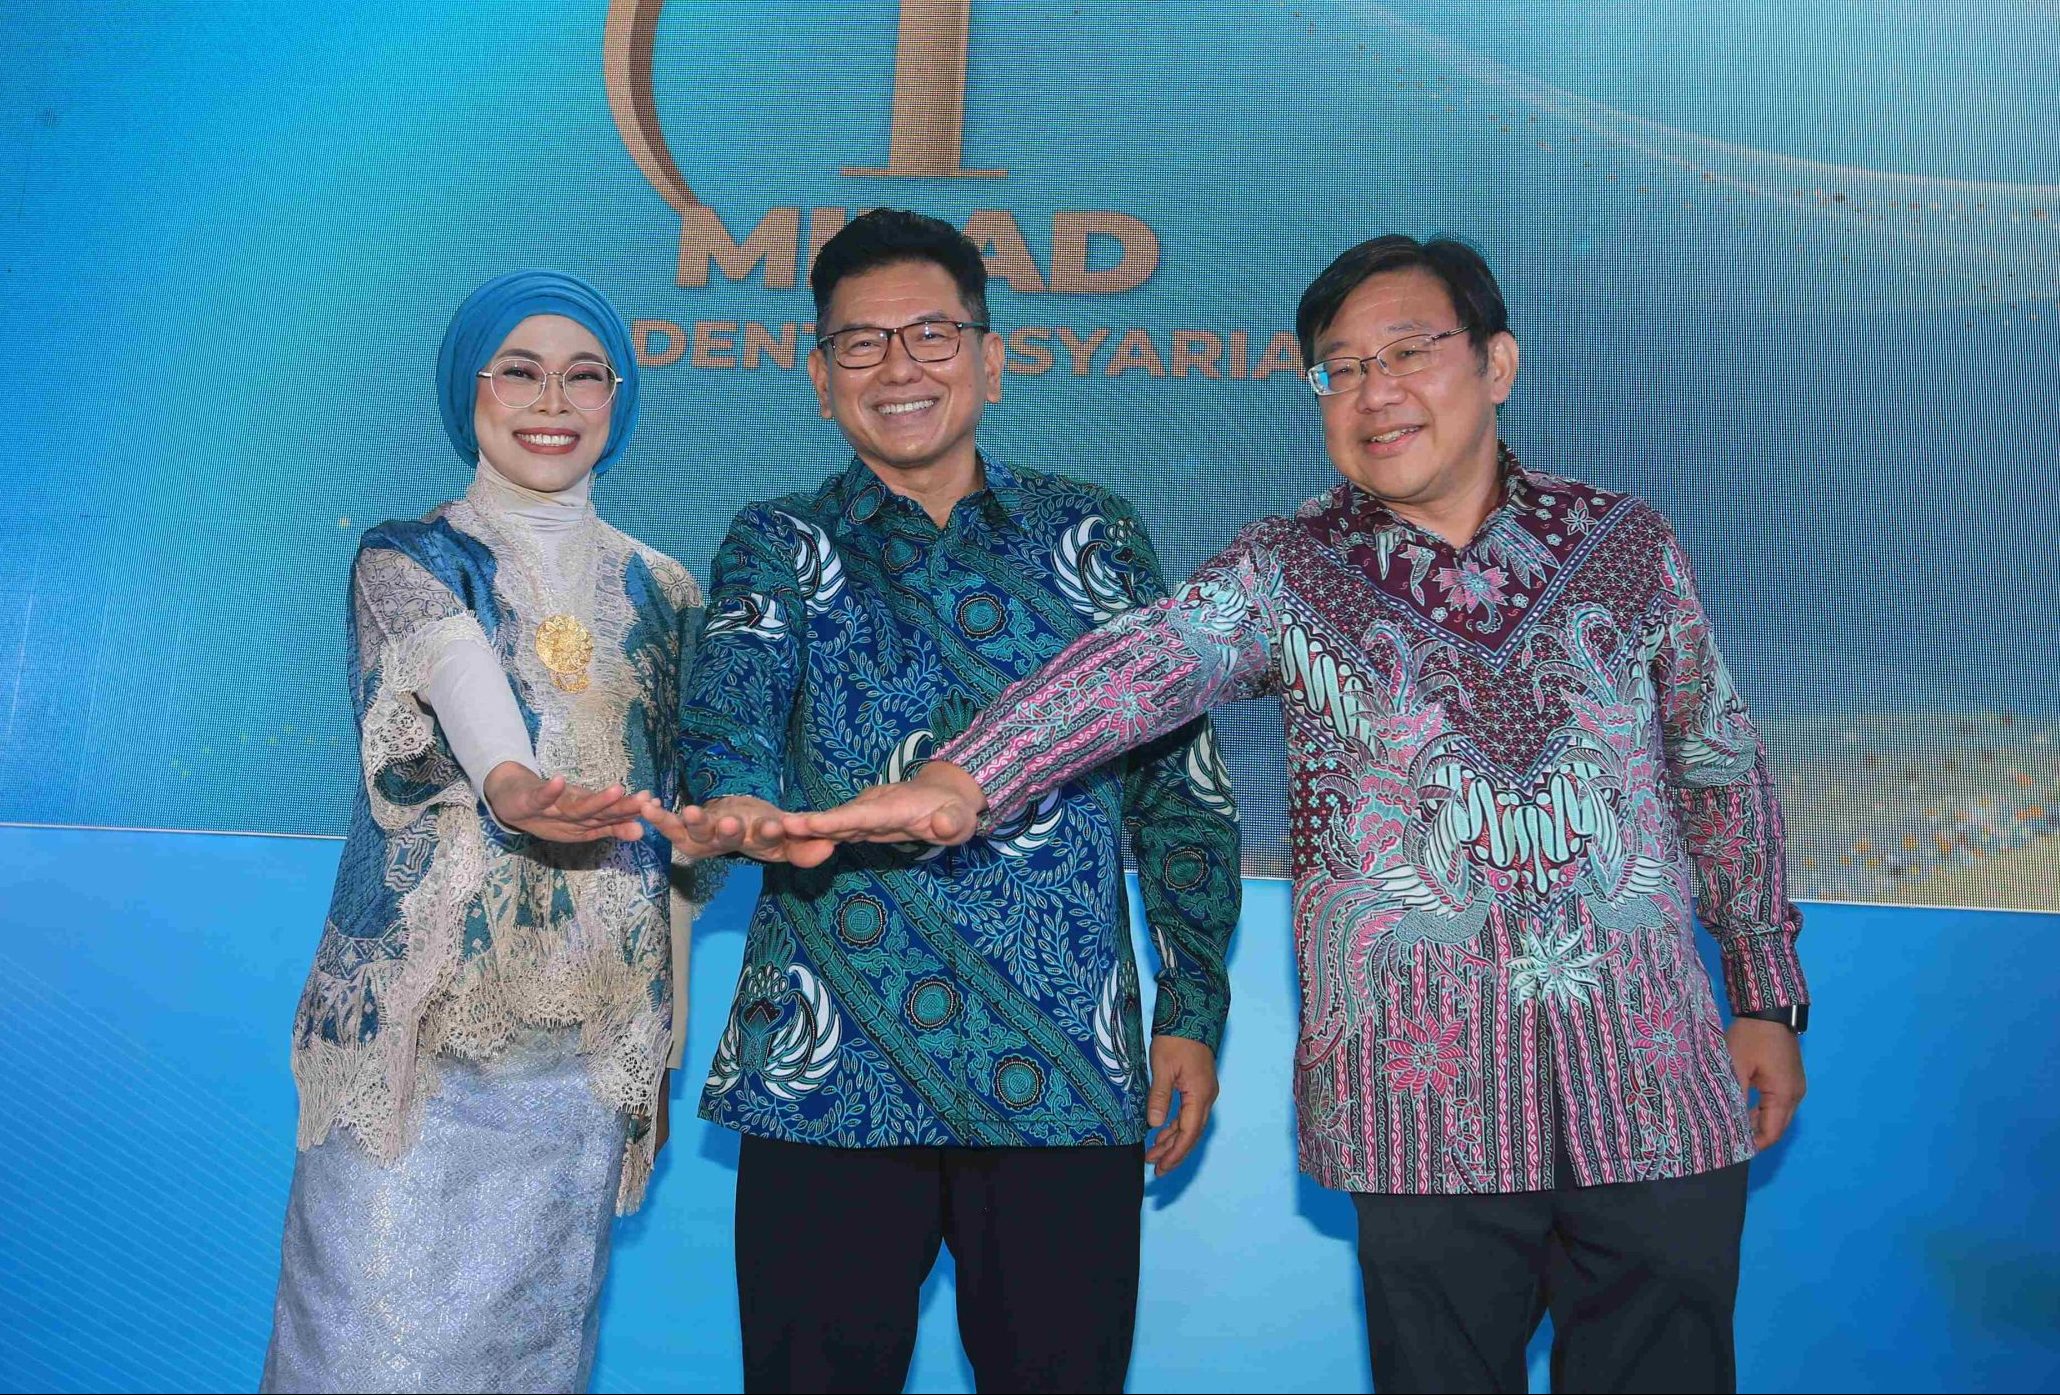 PT Prudential Sharia Life Assurance (Prudential Syariah) akan selalu fokus membantu memberikan perlindungan kepada keluarga Indonesia.